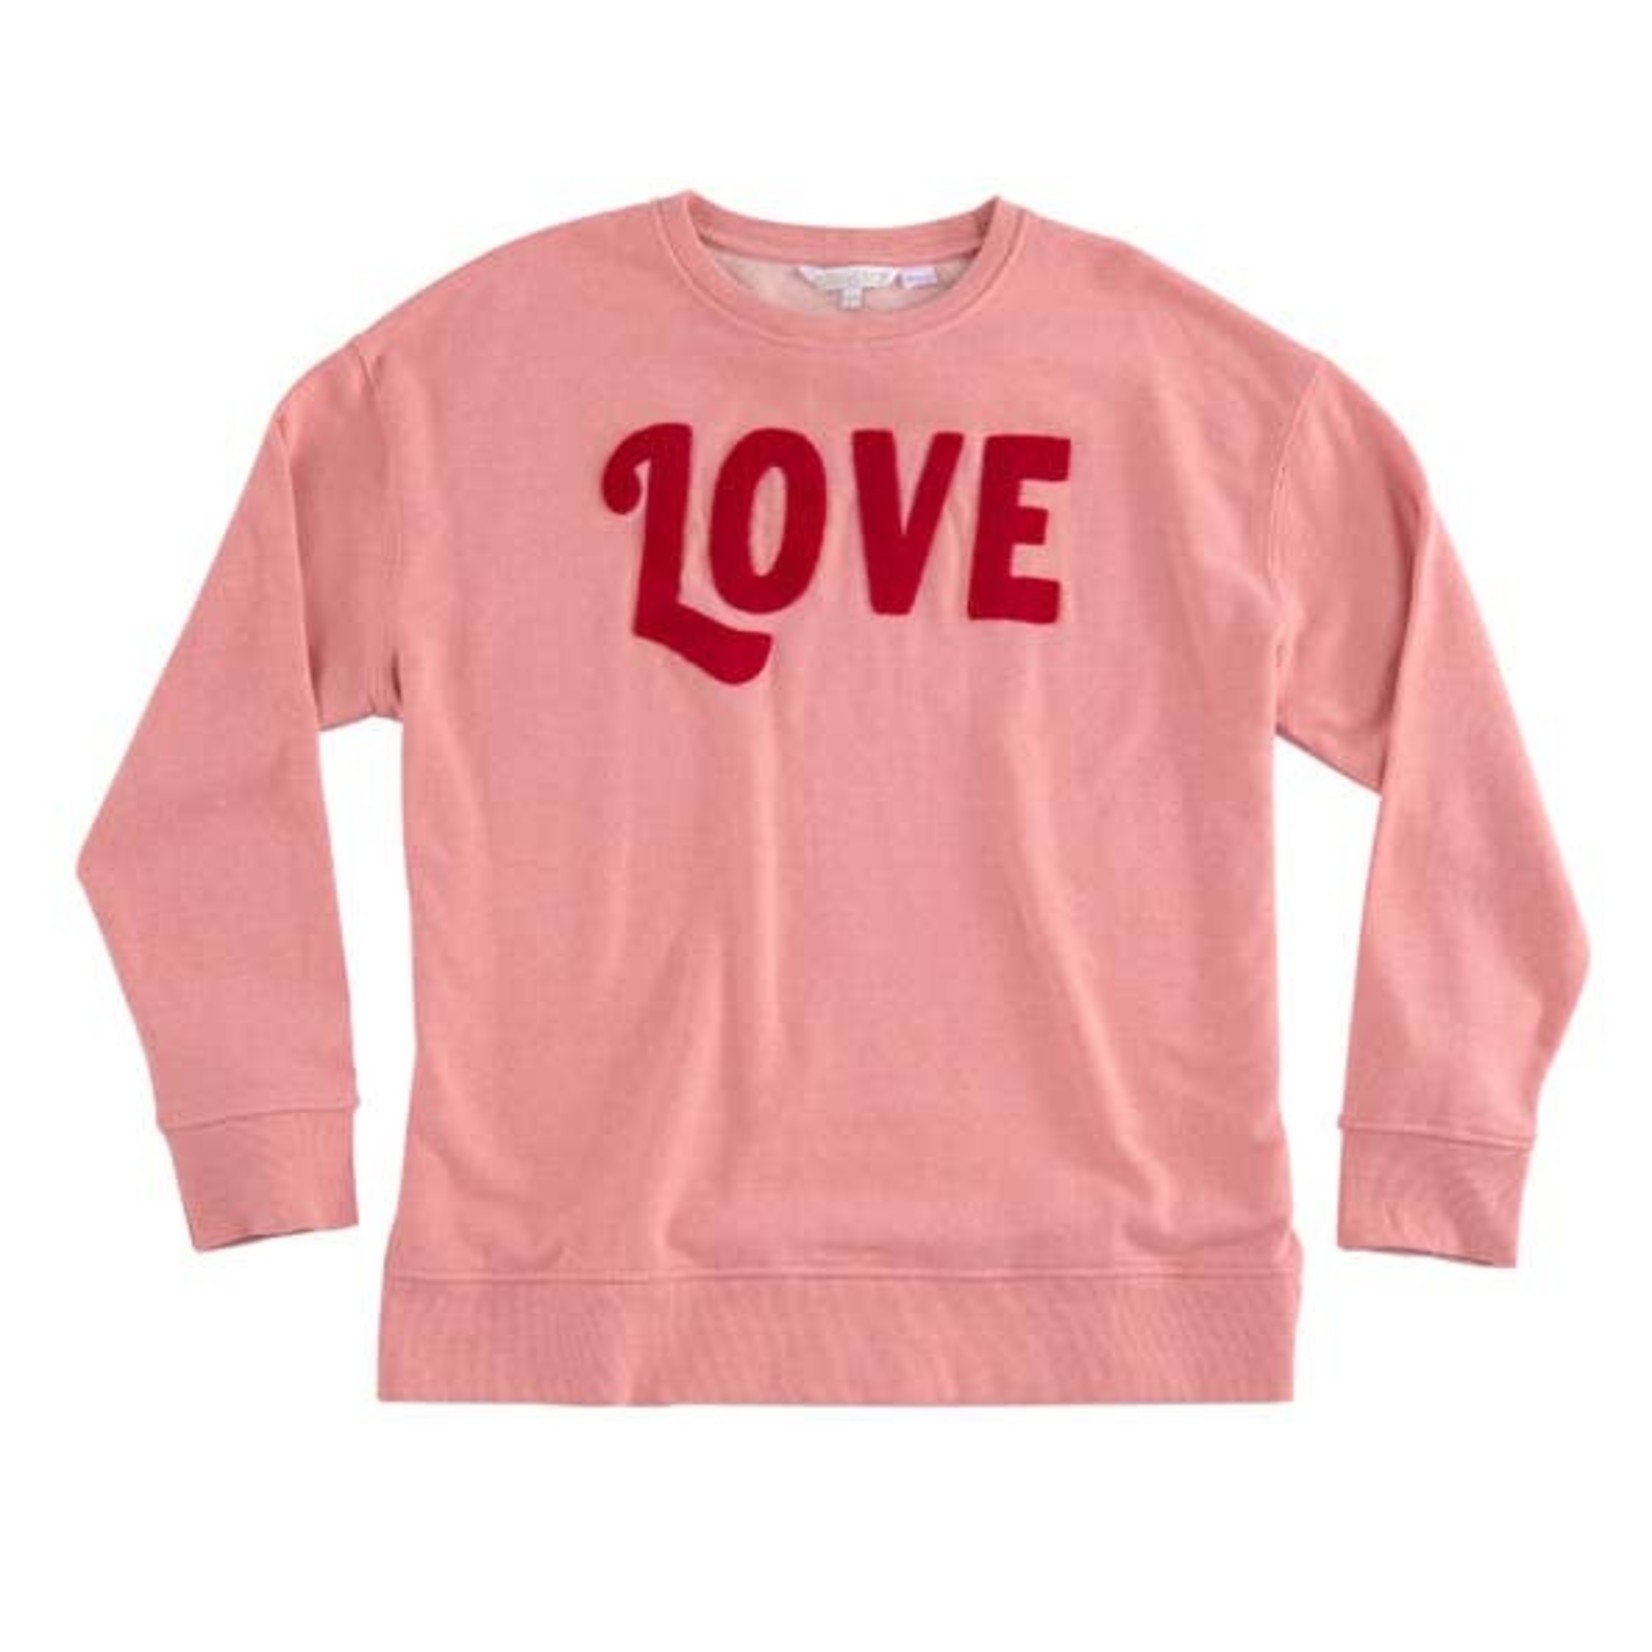 love, june "Love" Sweatshirt